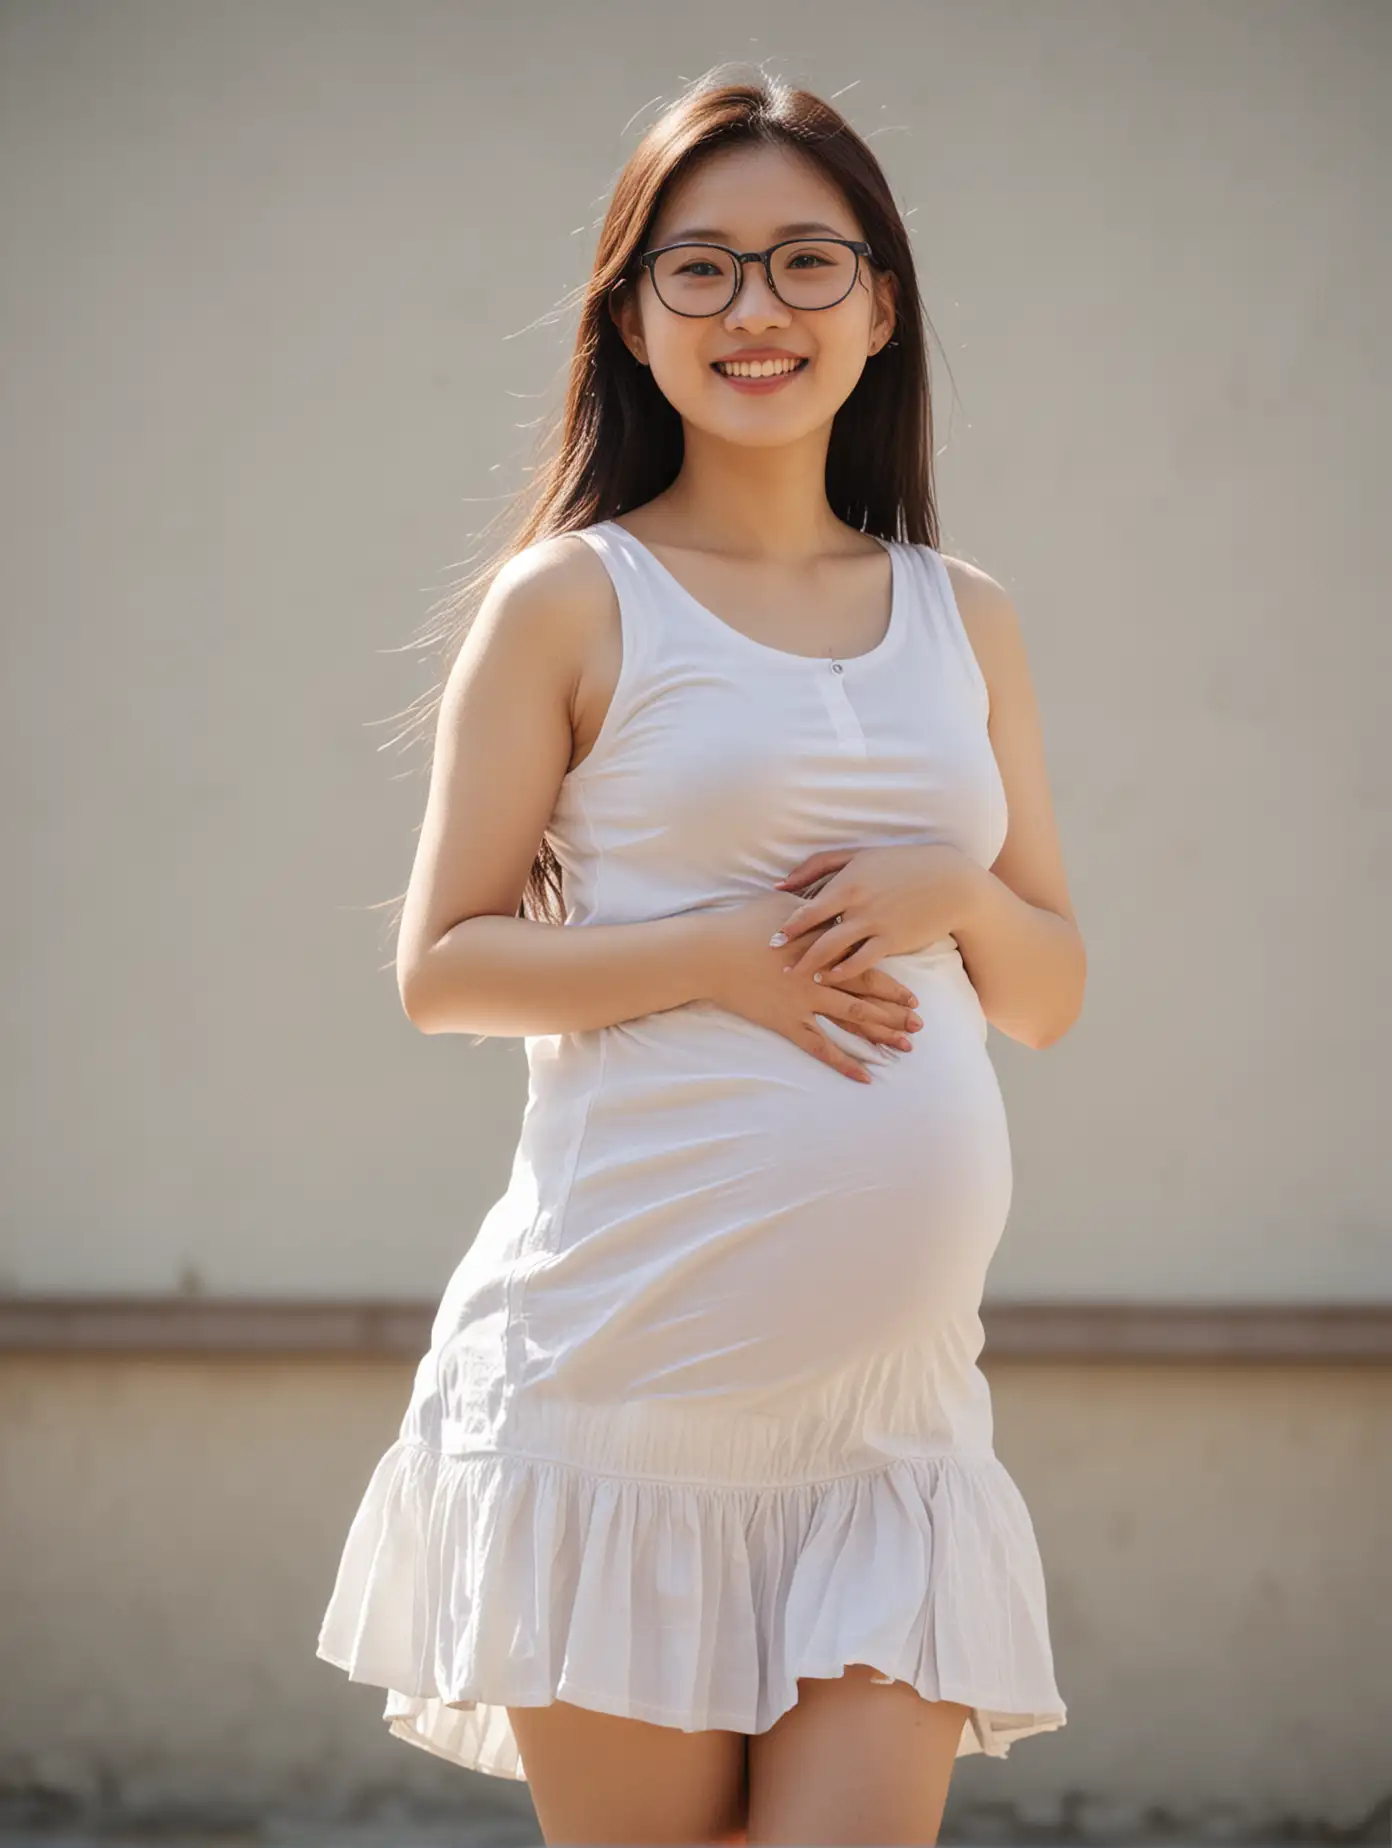 Chinese girl, pregnant, bulged belly, wearing white short skirt, wearing glasses, long hair, sunny smile, side profile